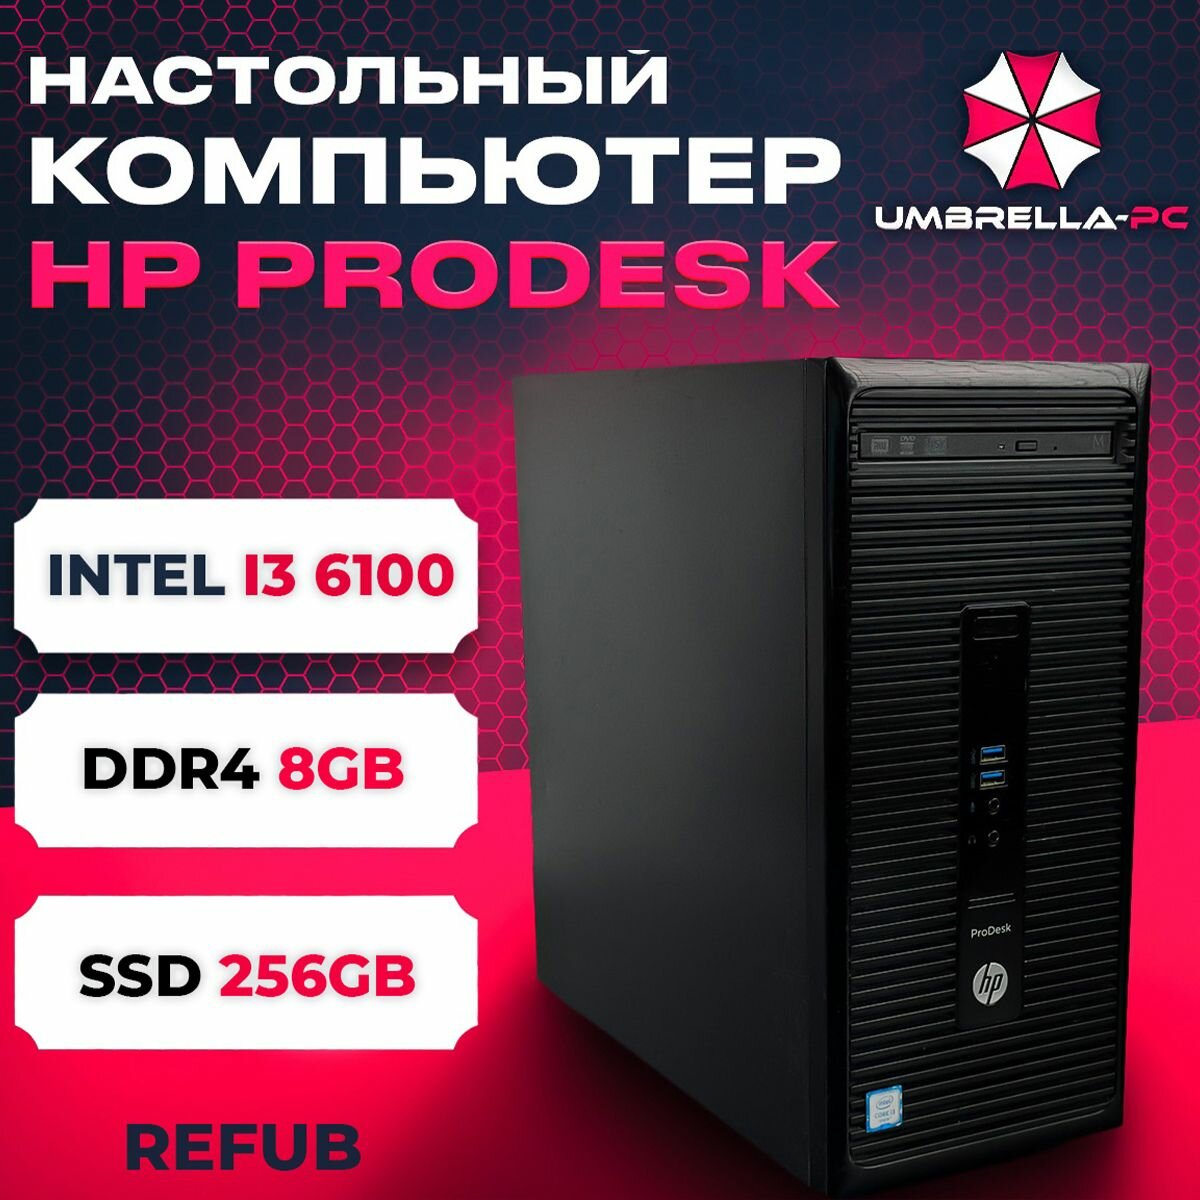 Системный блок HP ProDesk 400 G3 MT intel core i3 6100 8GB 256GB SSD